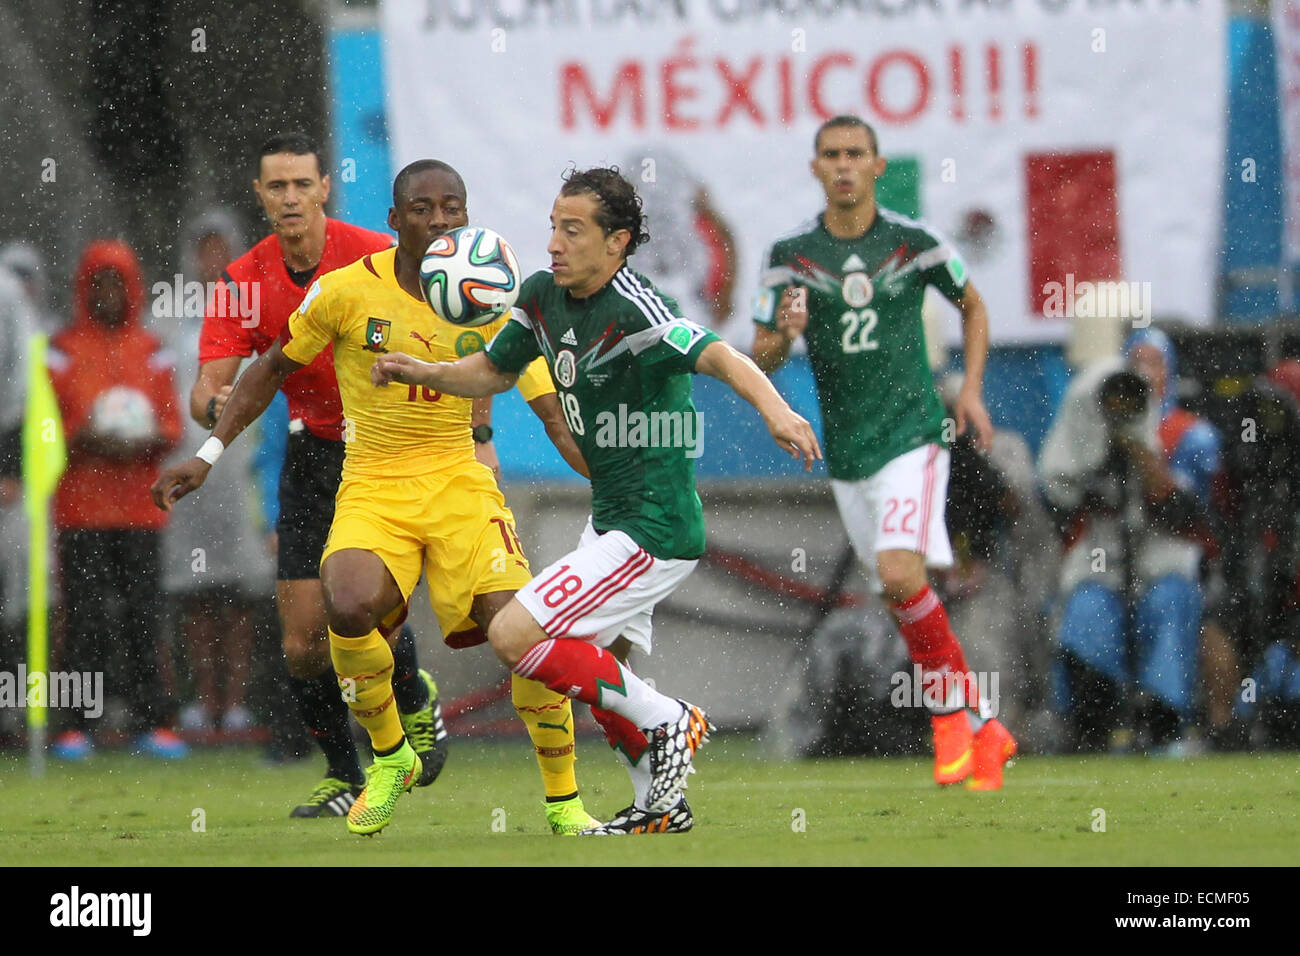 2014 FIFA World Cup - Group A match, Mexico 1 - 0 Cameroon, held at Estadio das Dunas, Natal  Featuring: Andres Guardado Where: Natal, RN, Brazil When: 13 Jun 2014 Stock Photo